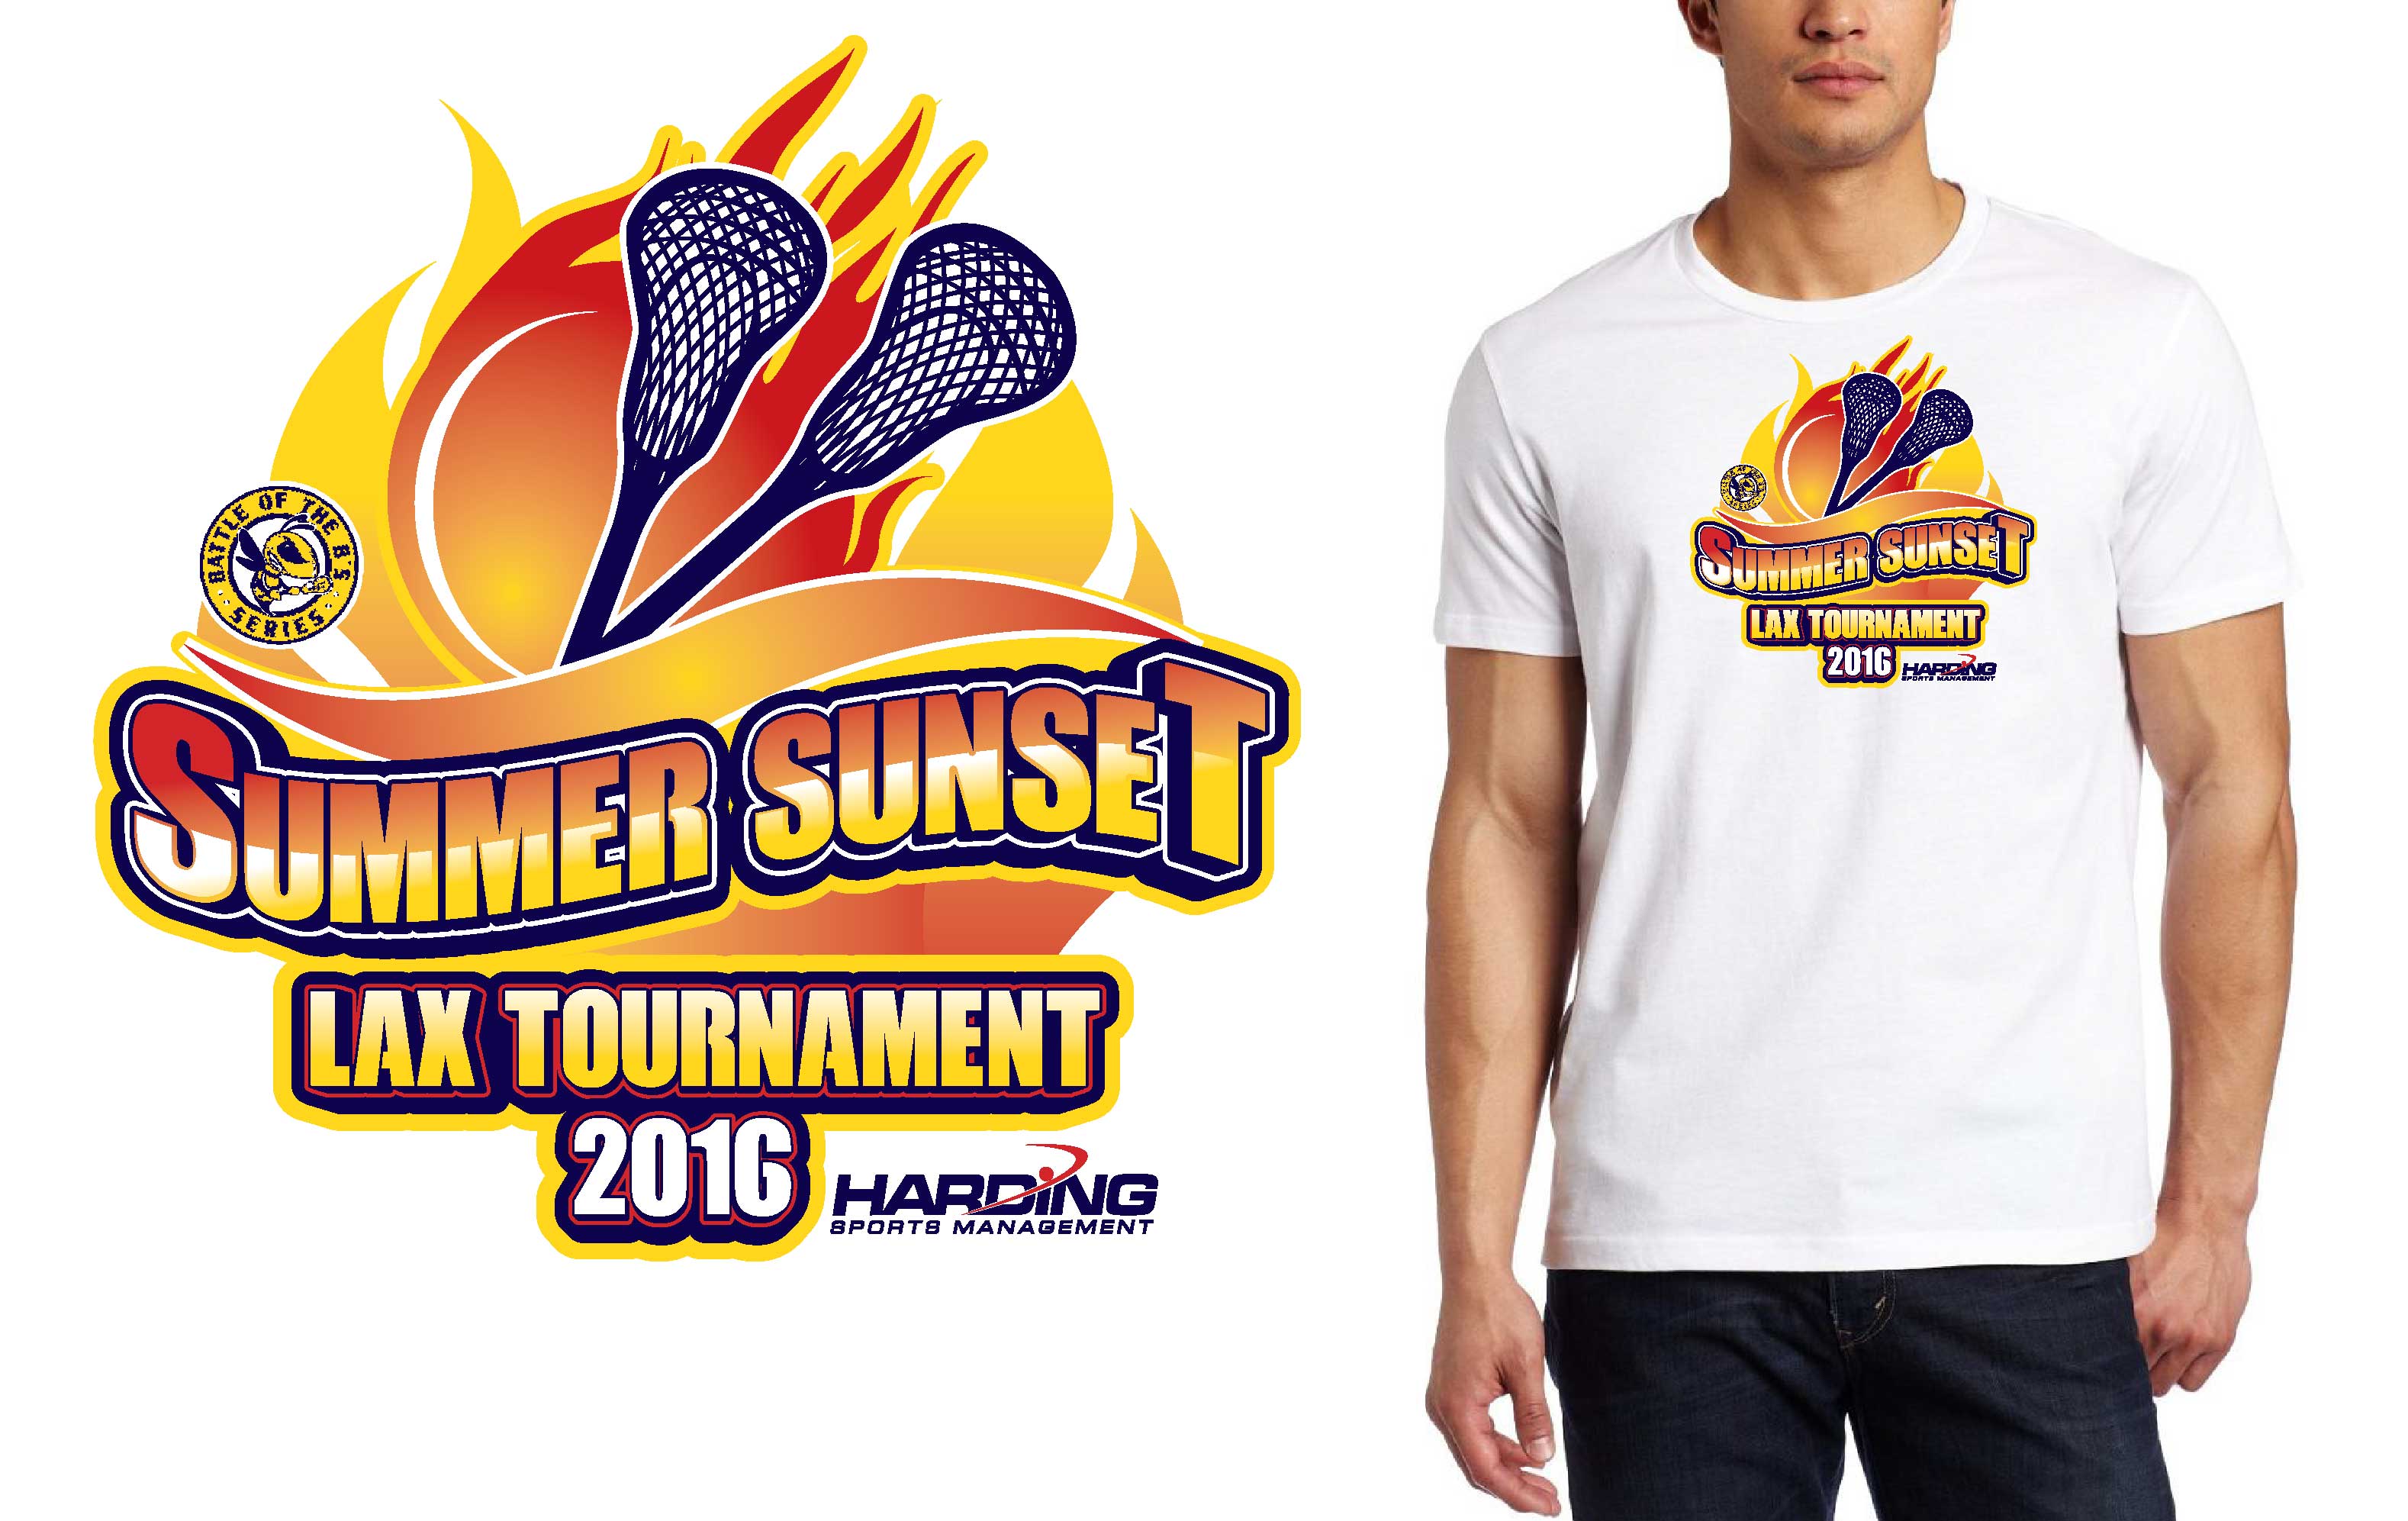 Cool Lacrosse Logo - Cool vector logo design for July 23 2016 Summer Sunset Lax